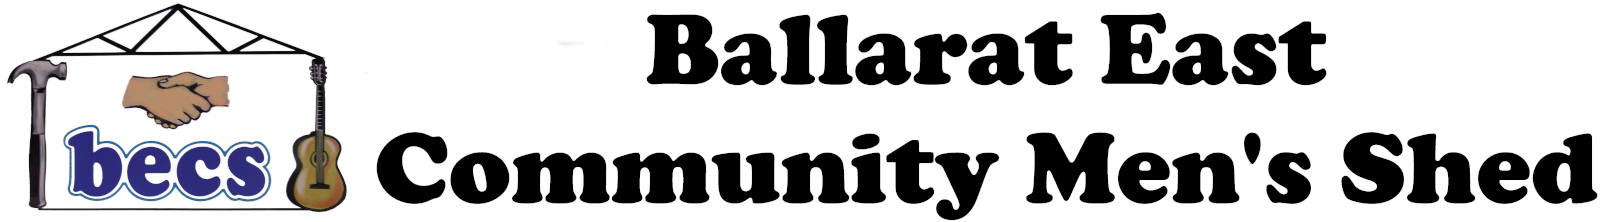 Ballarat East Community Men's Shed